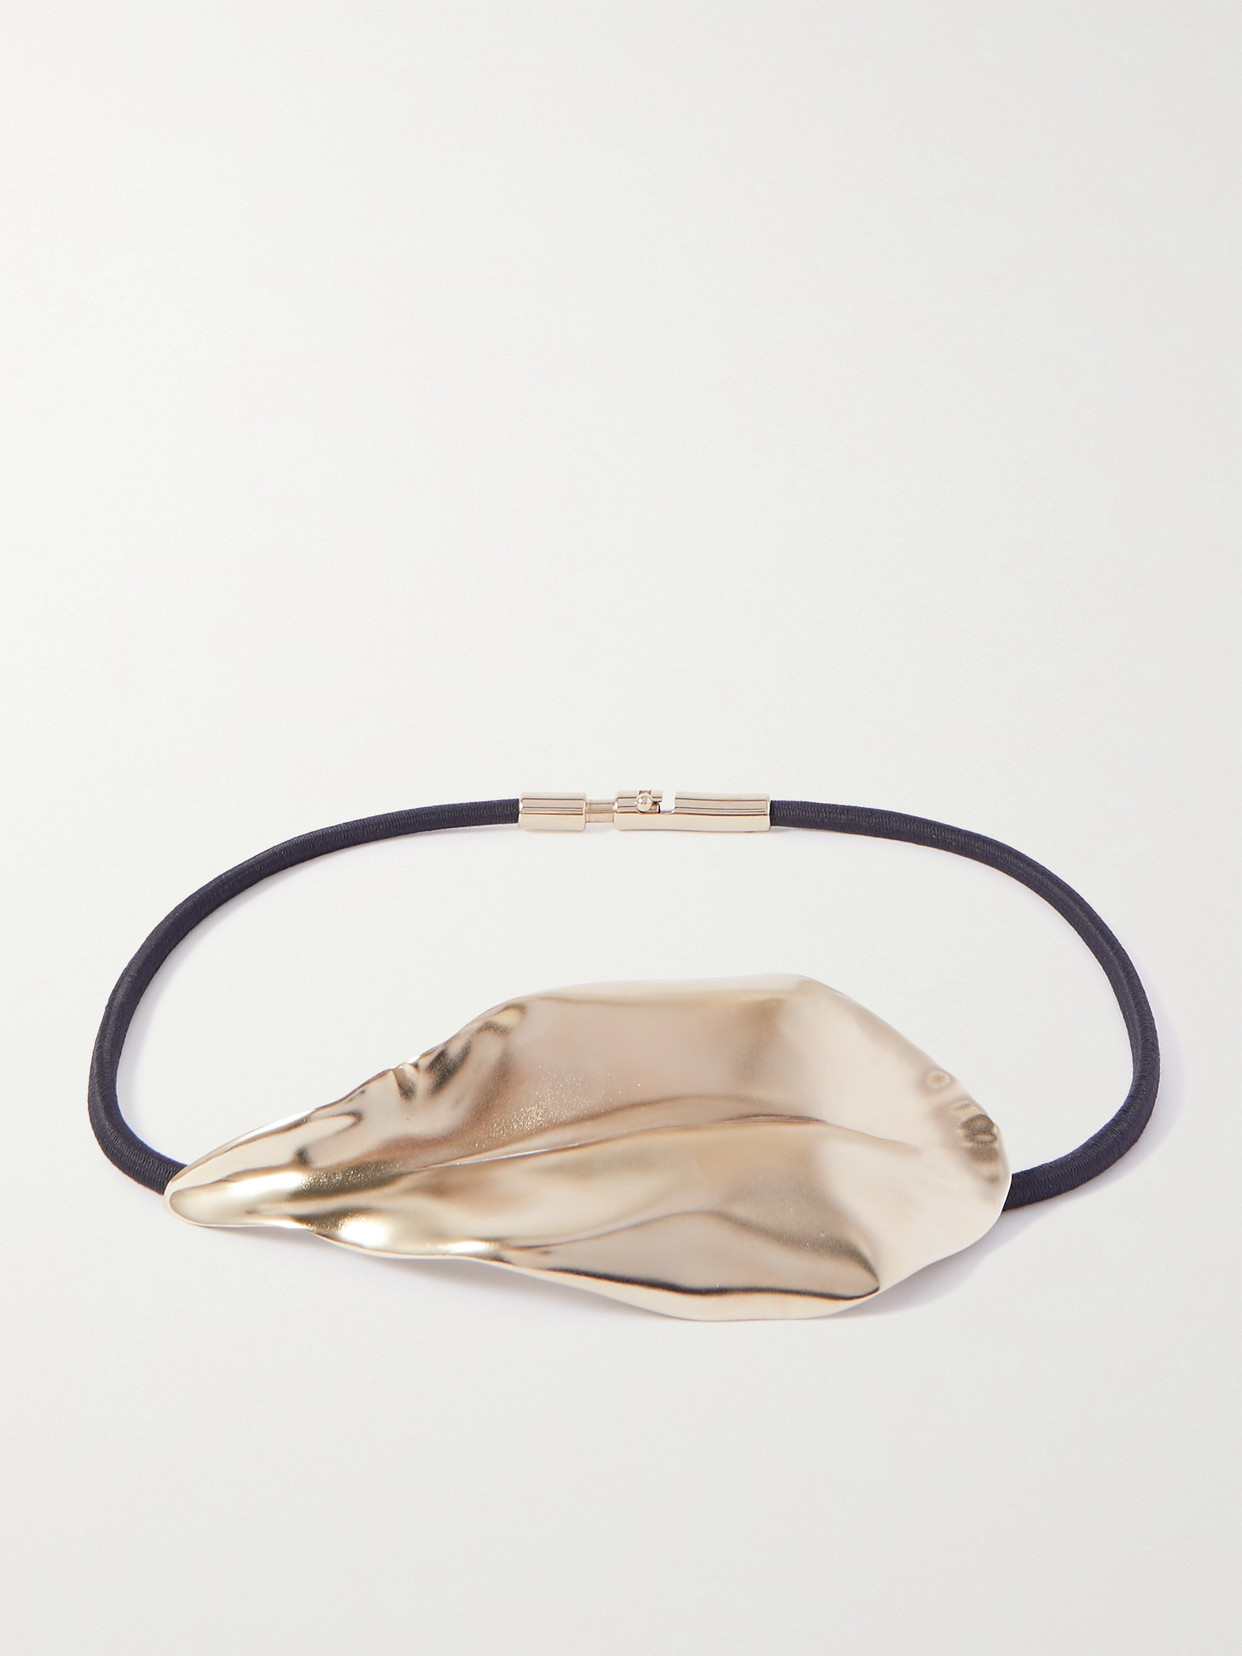 + Atelier Jolie Gold-Tone and Cord Waist Belt